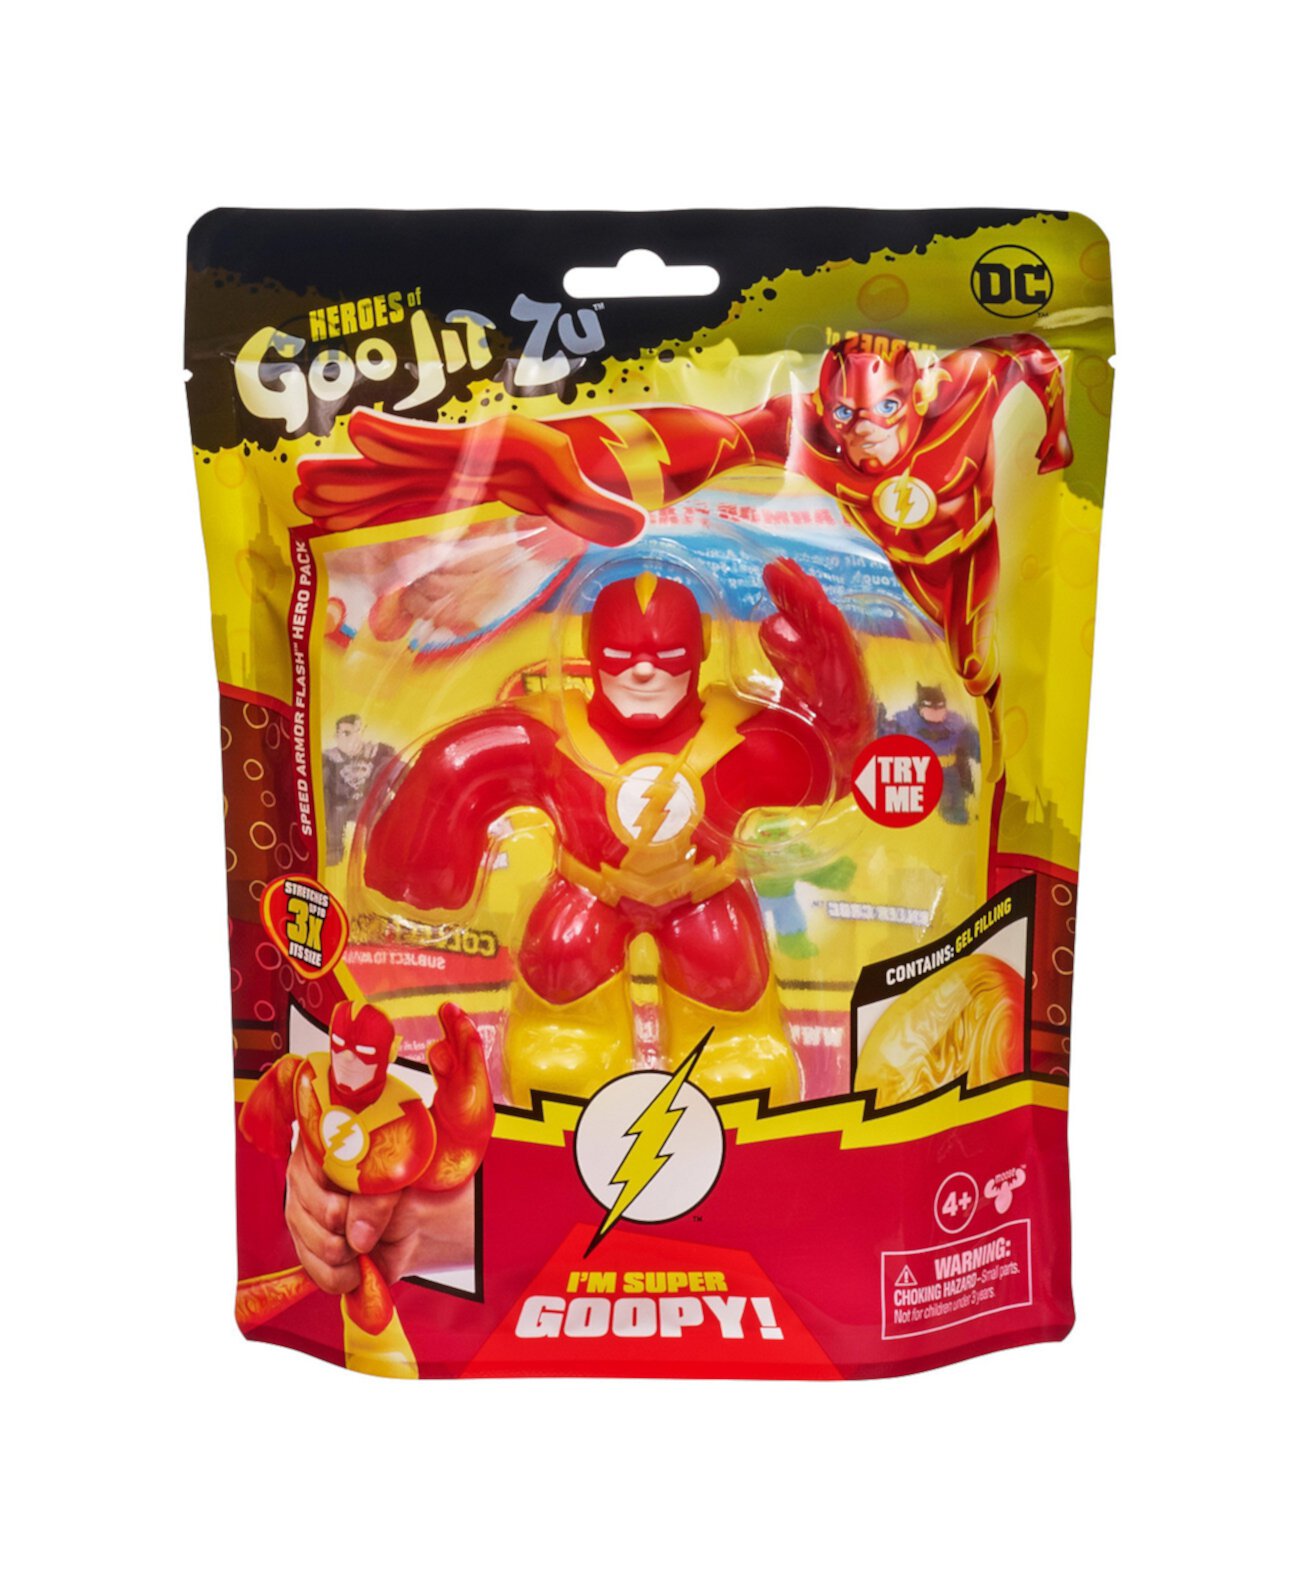 Вспышка игрушечной скоростной брони DC Hero Series 4 Heroes of Goo Jit Zu